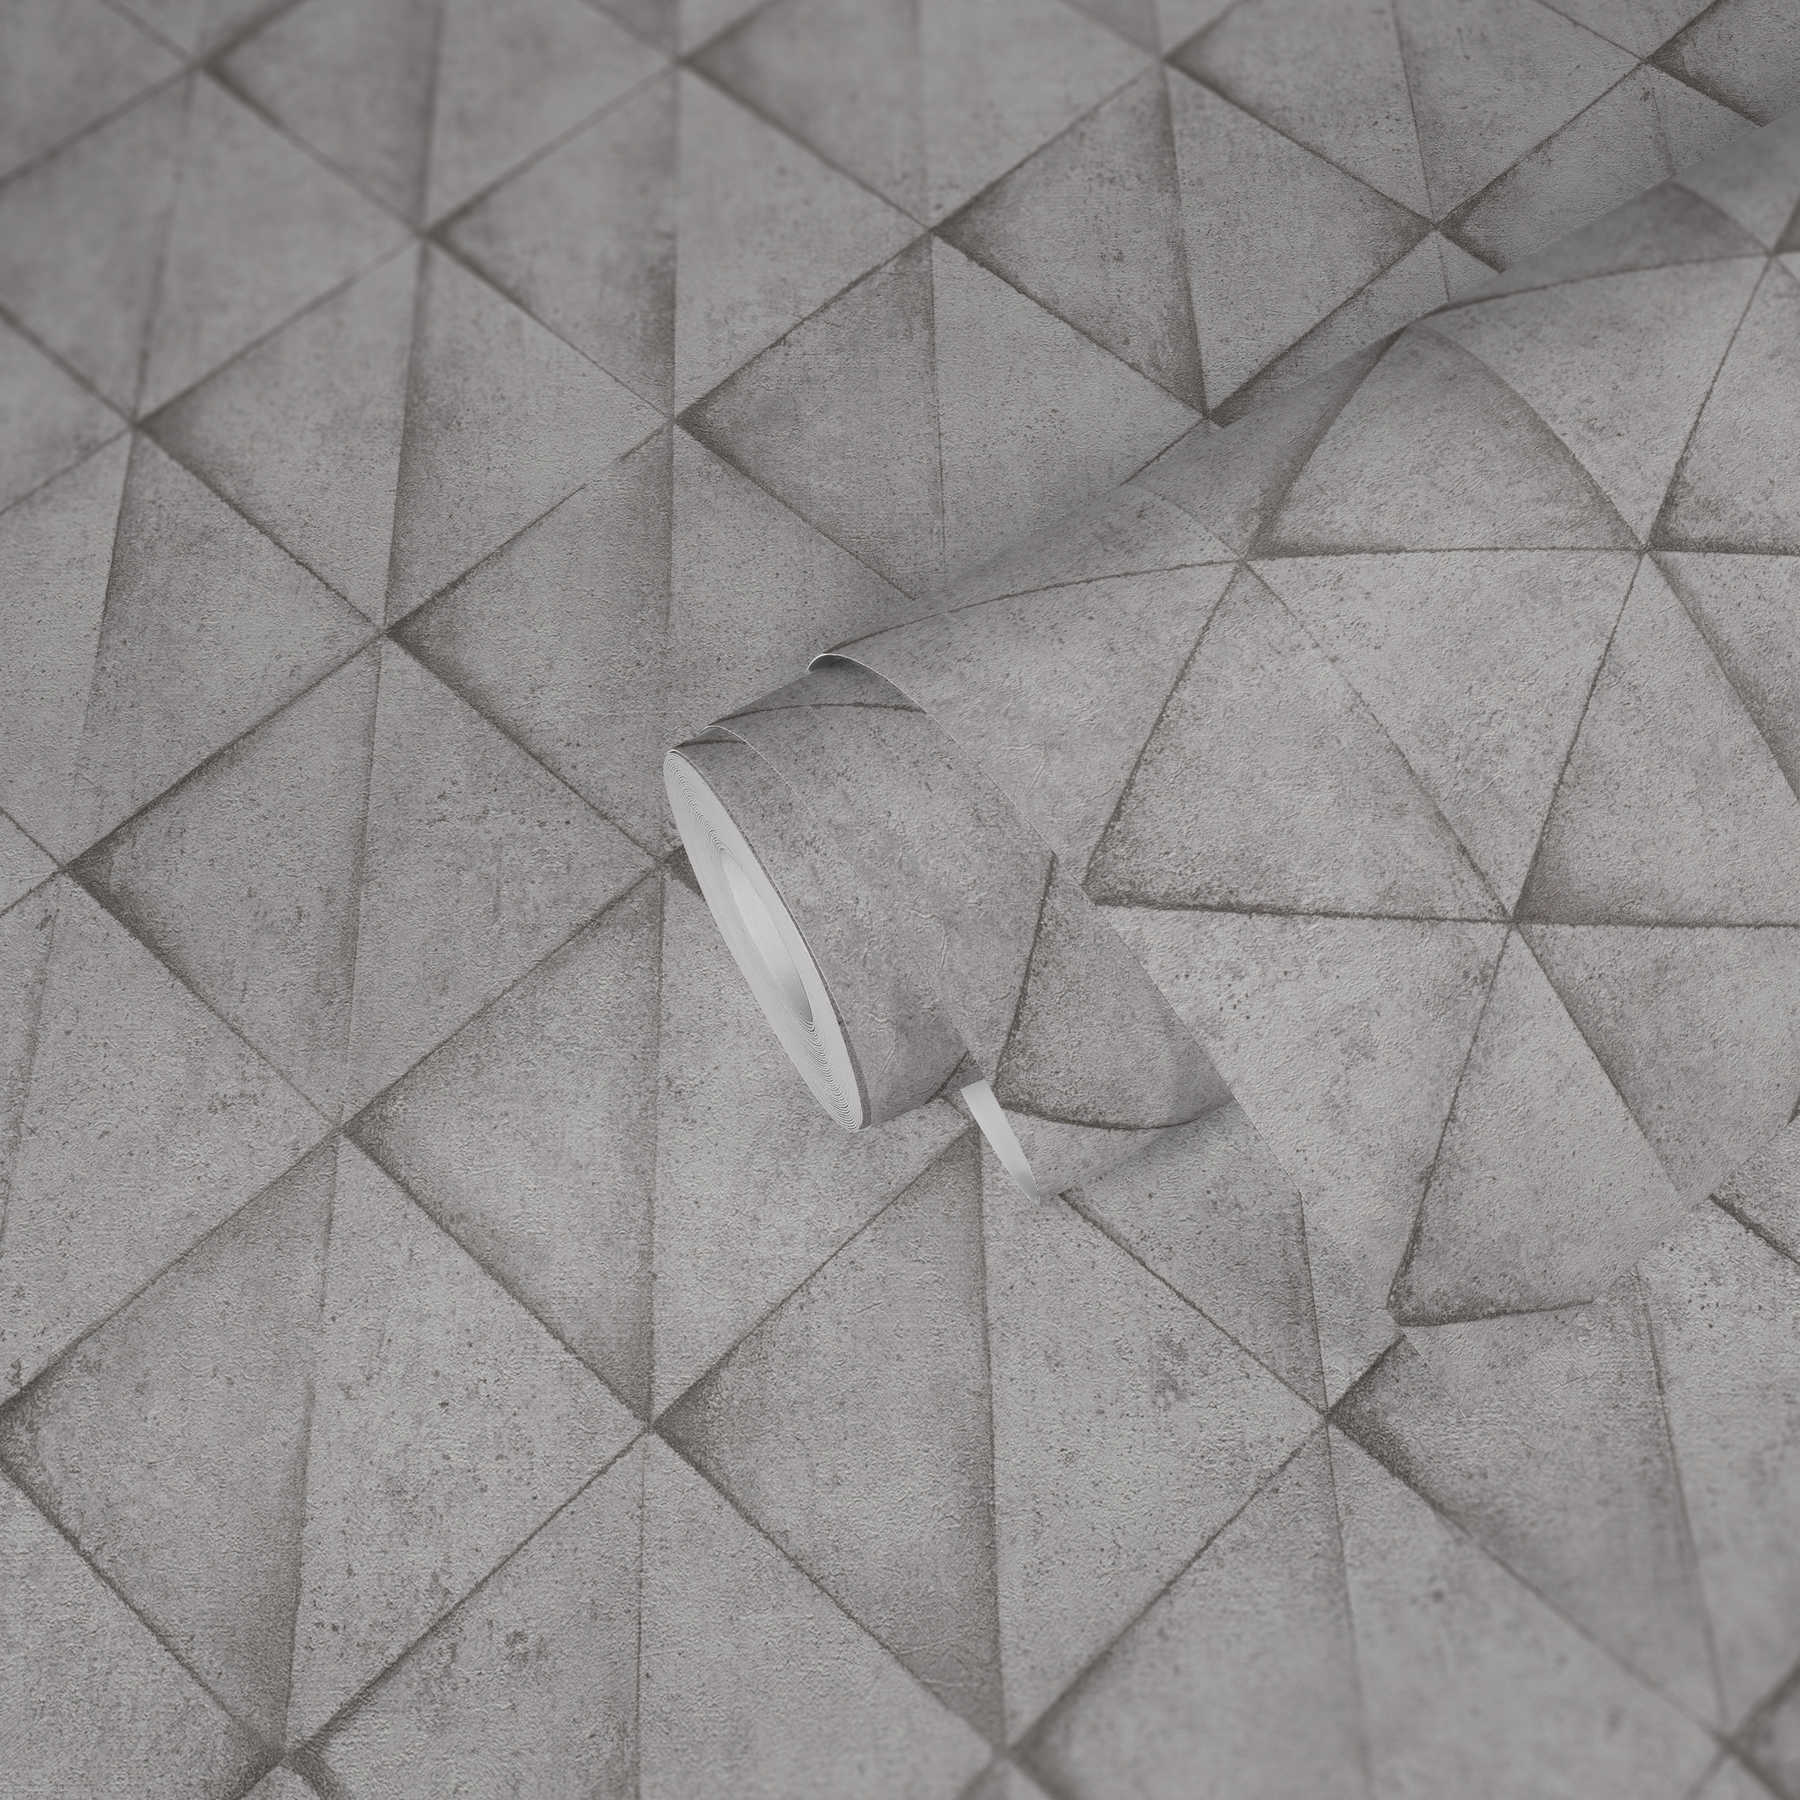             Concrete optics wallpaper tile pattern, 3D used look - grey, white
        